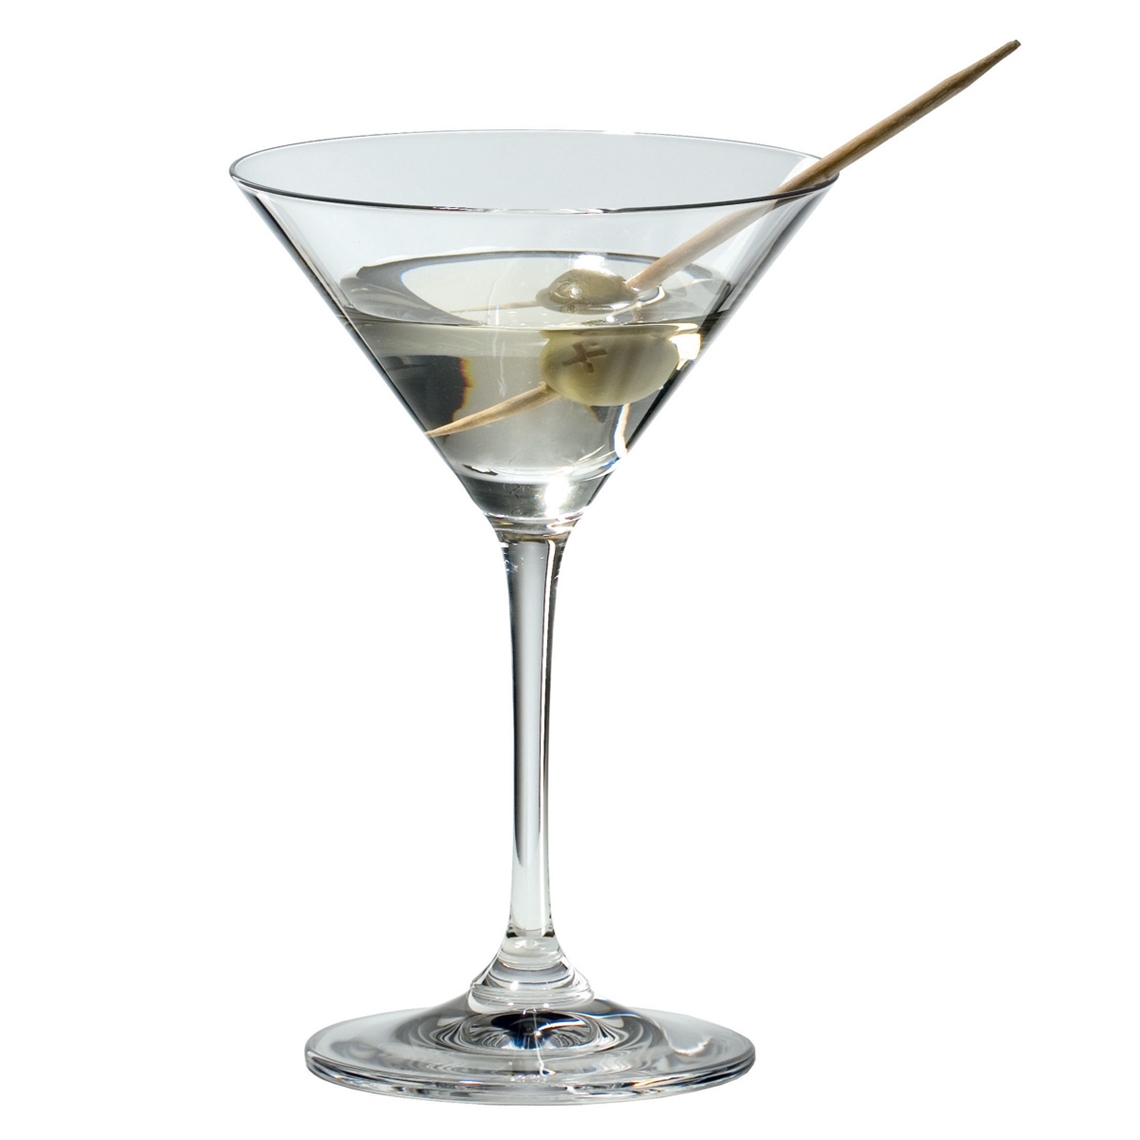 View more glassware from our Martini Glasses range